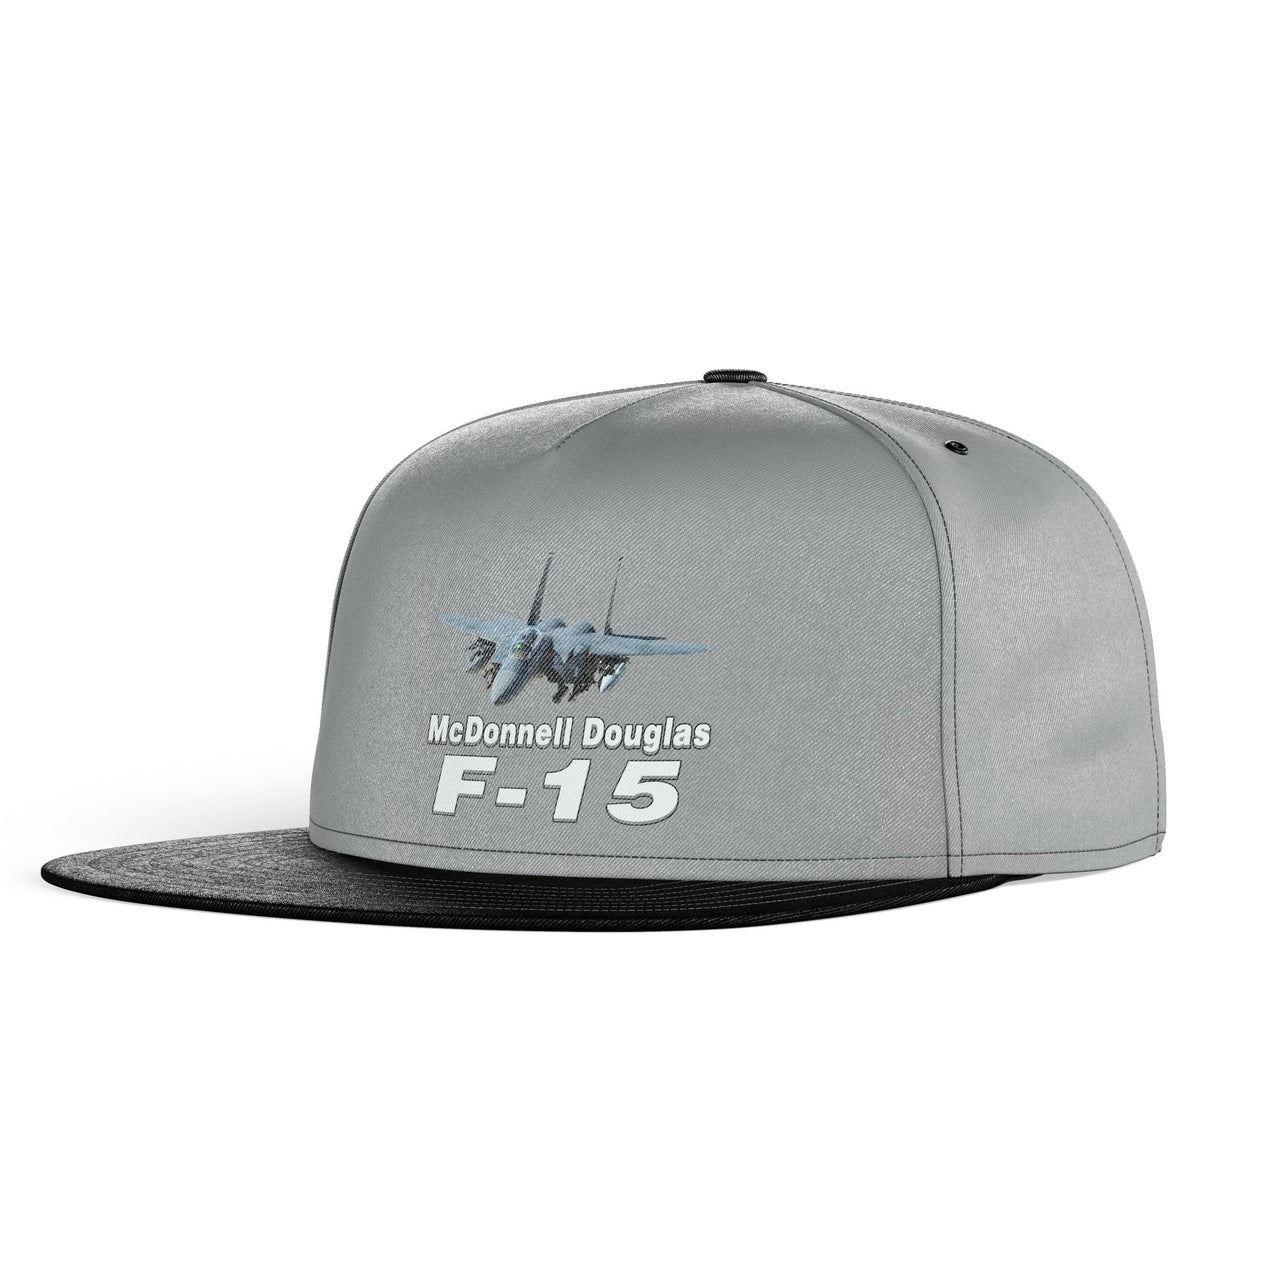 The McDonnell Douglas F15 Designed Snapback Caps & Hats